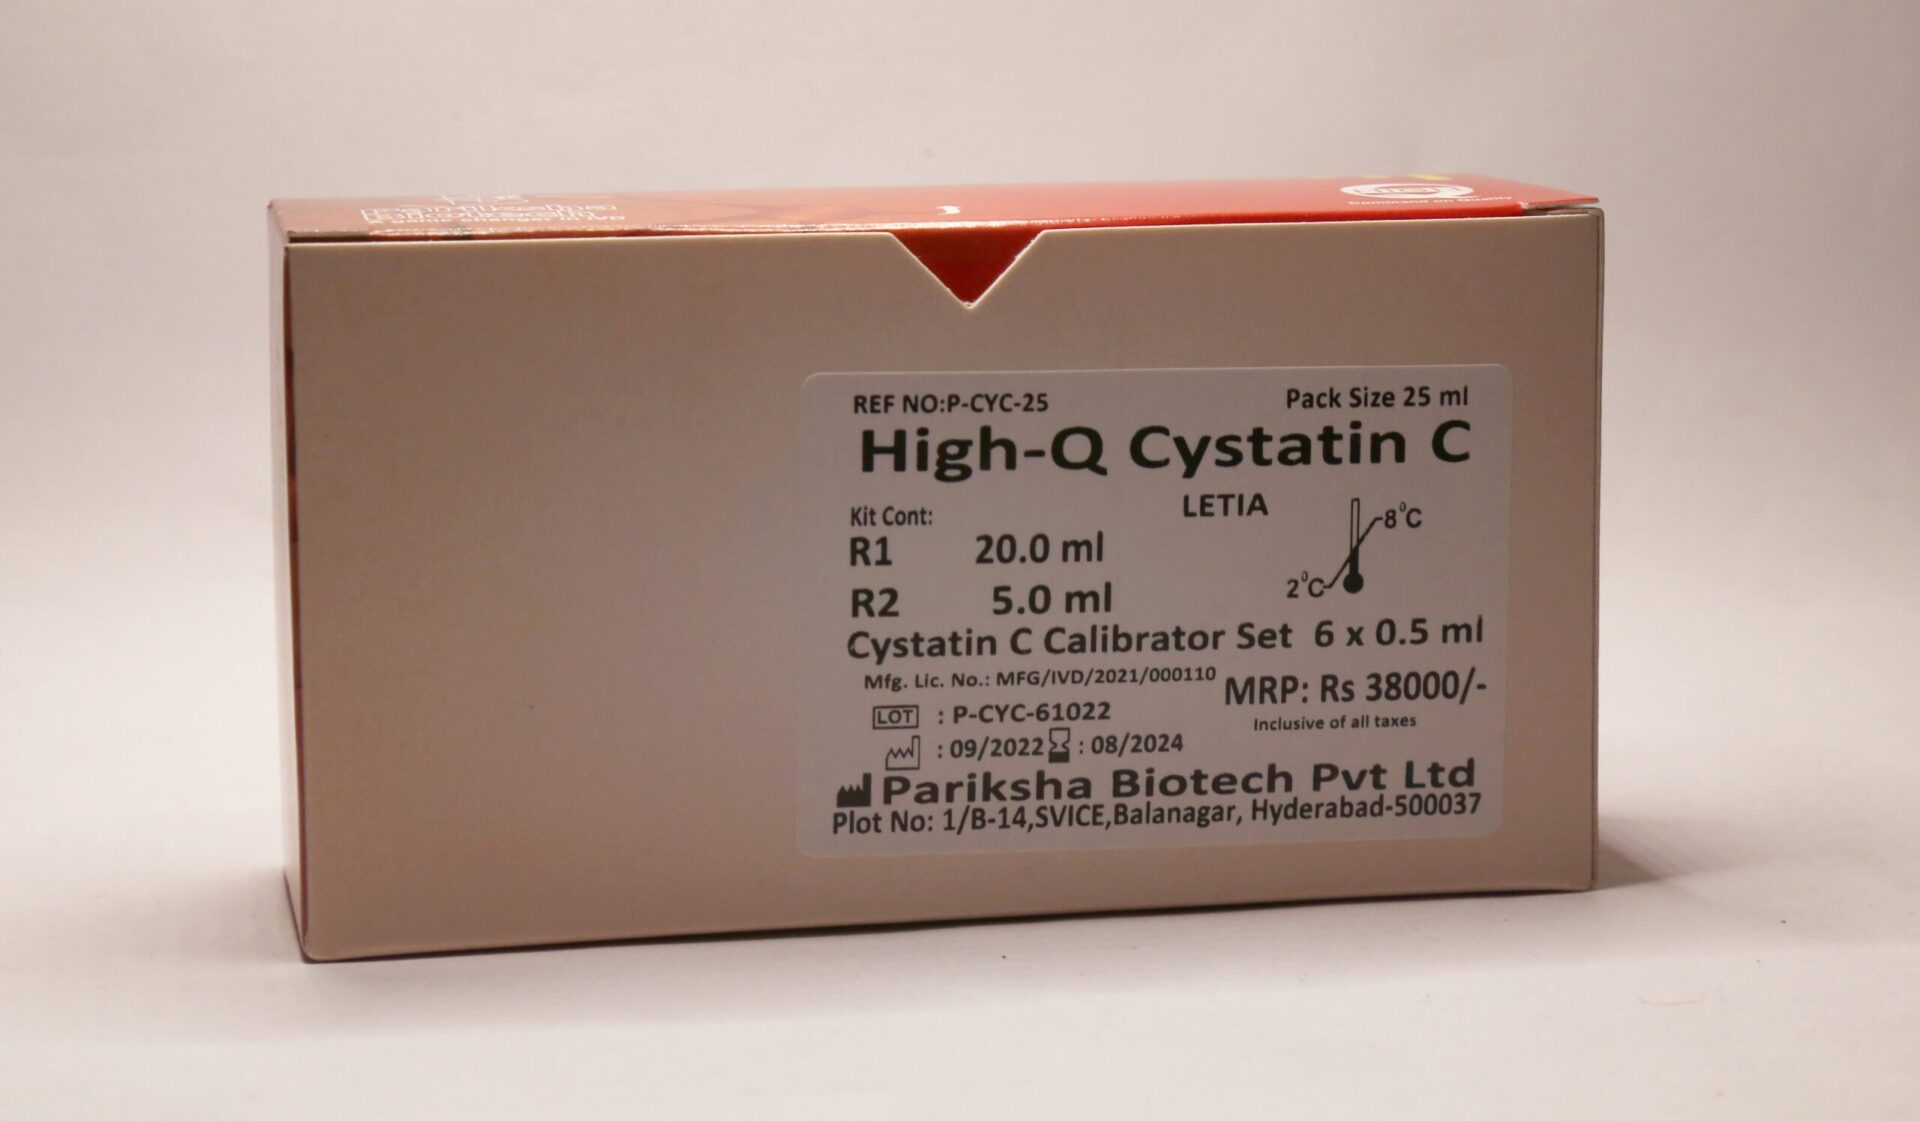 Cystatin C 25 ml with cal